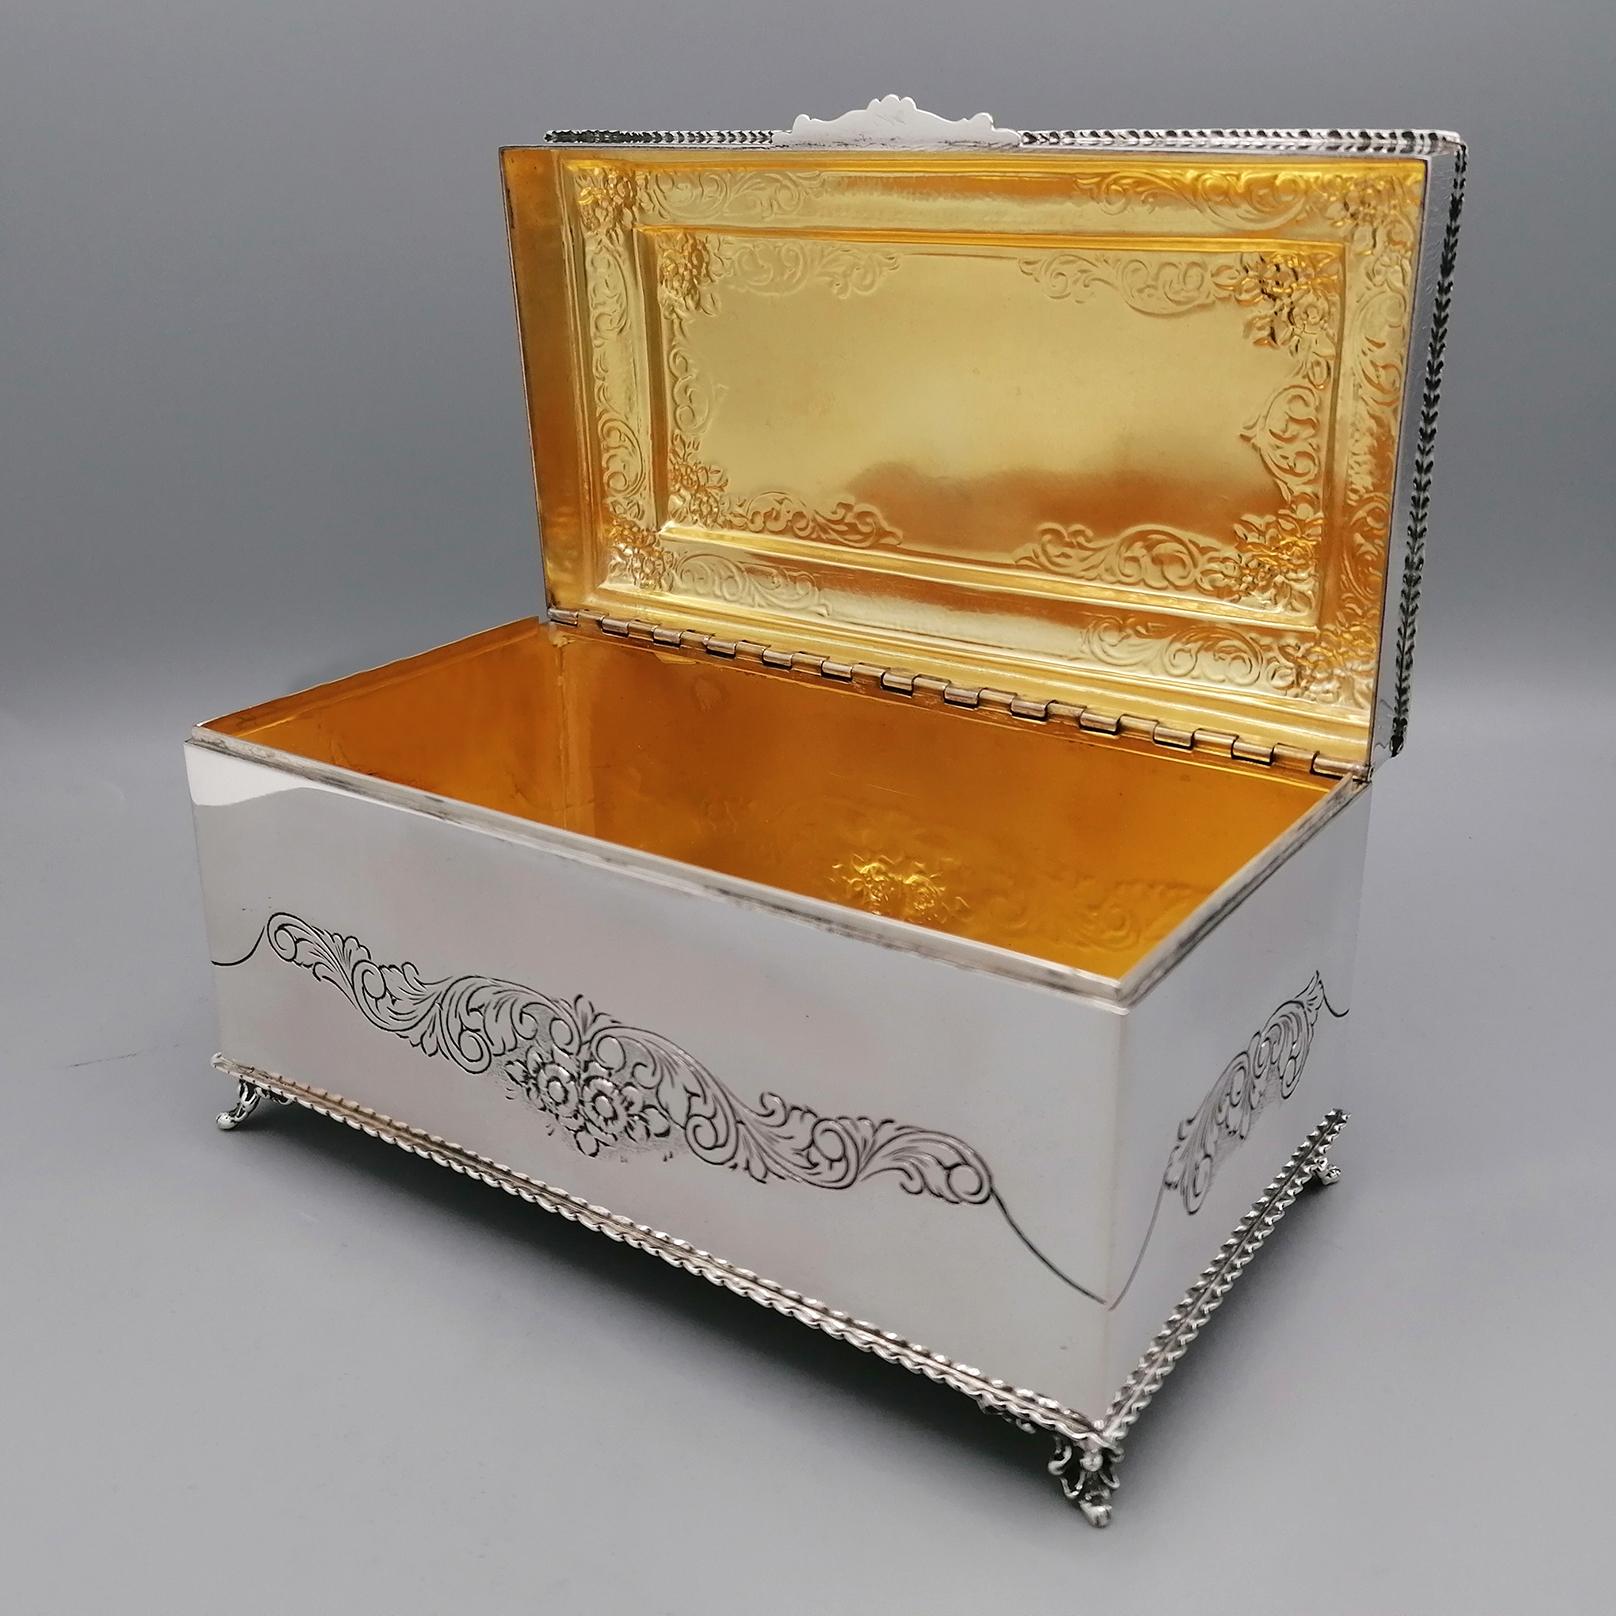 20th Century Italian 800 Solid Silver Jewel Box For Sale 3